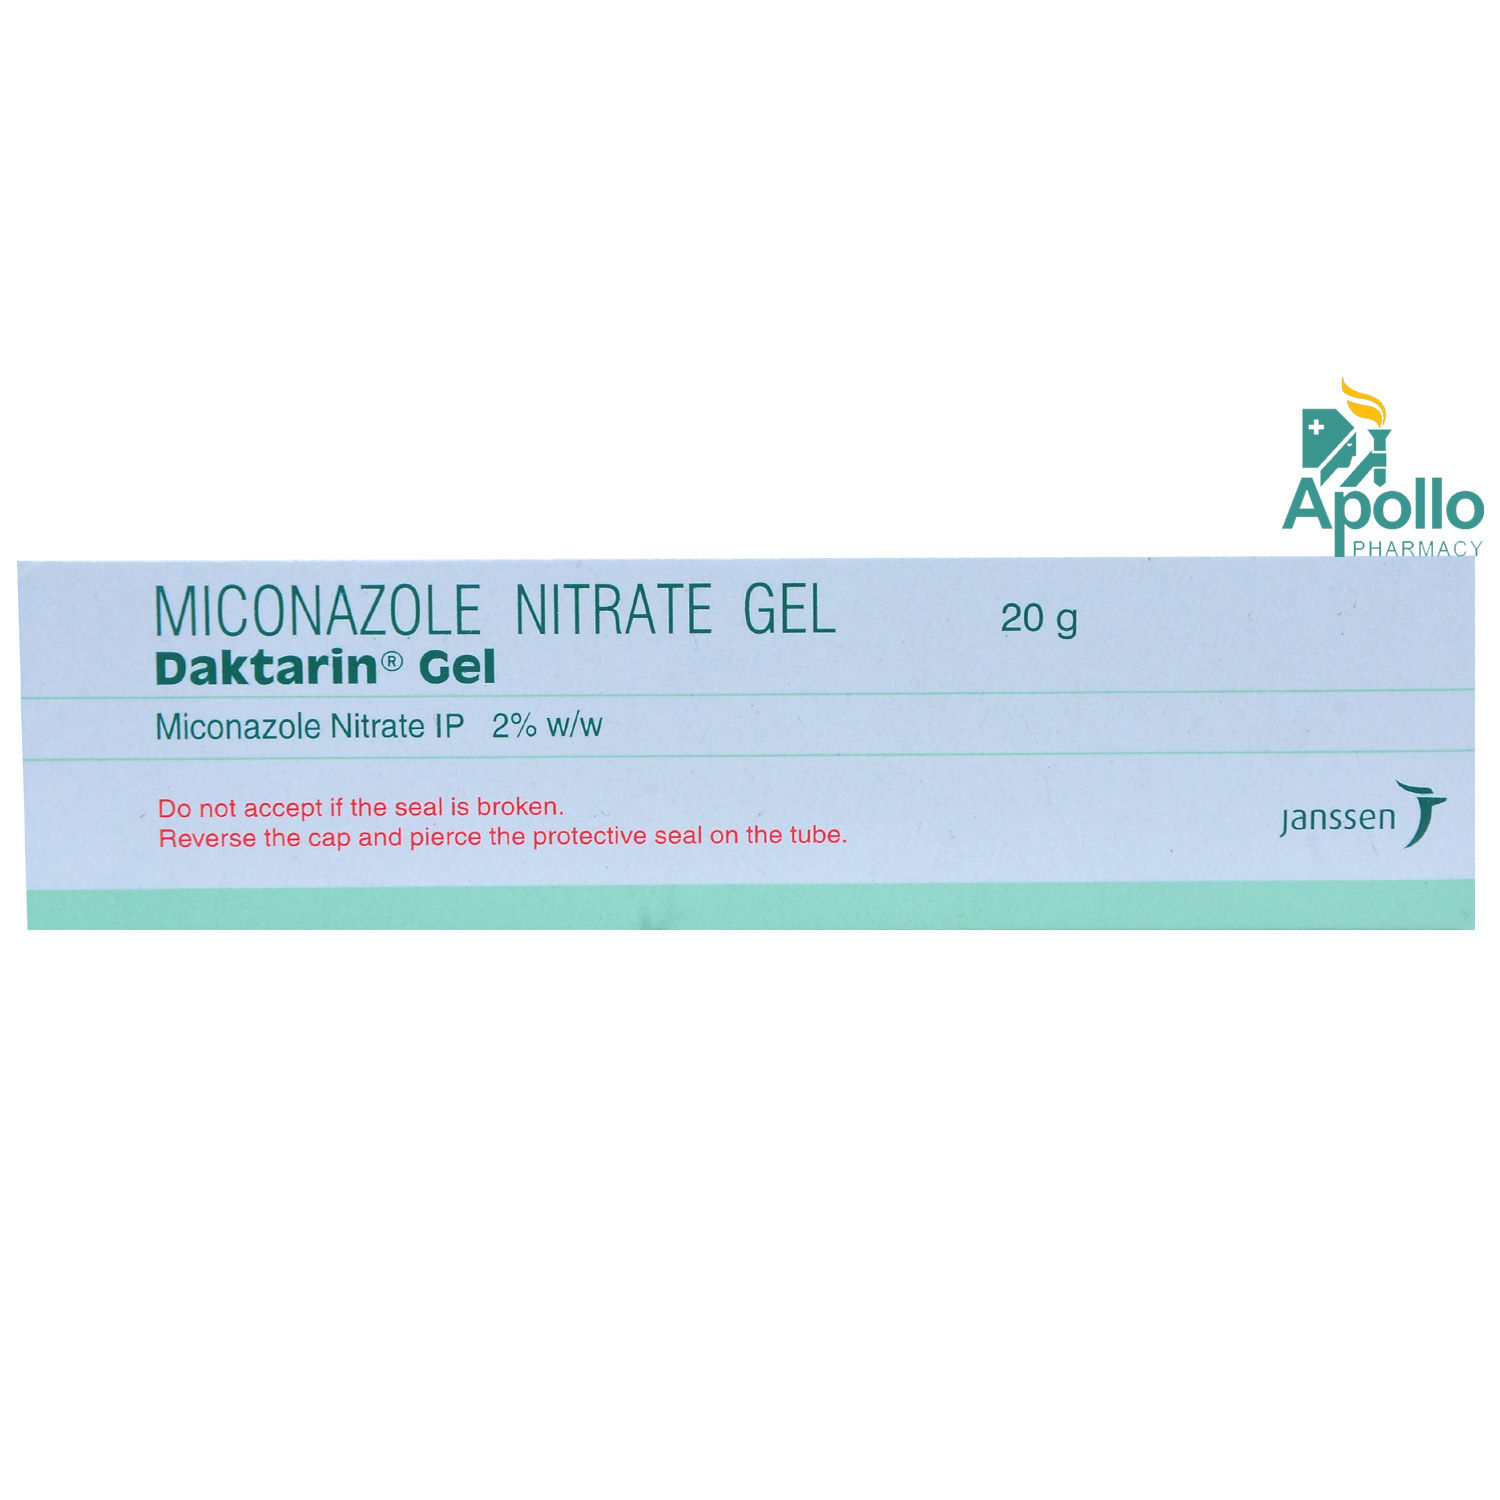 Daktarin Gel | Uses, Side Effects, Price | Apollo Pharmacy